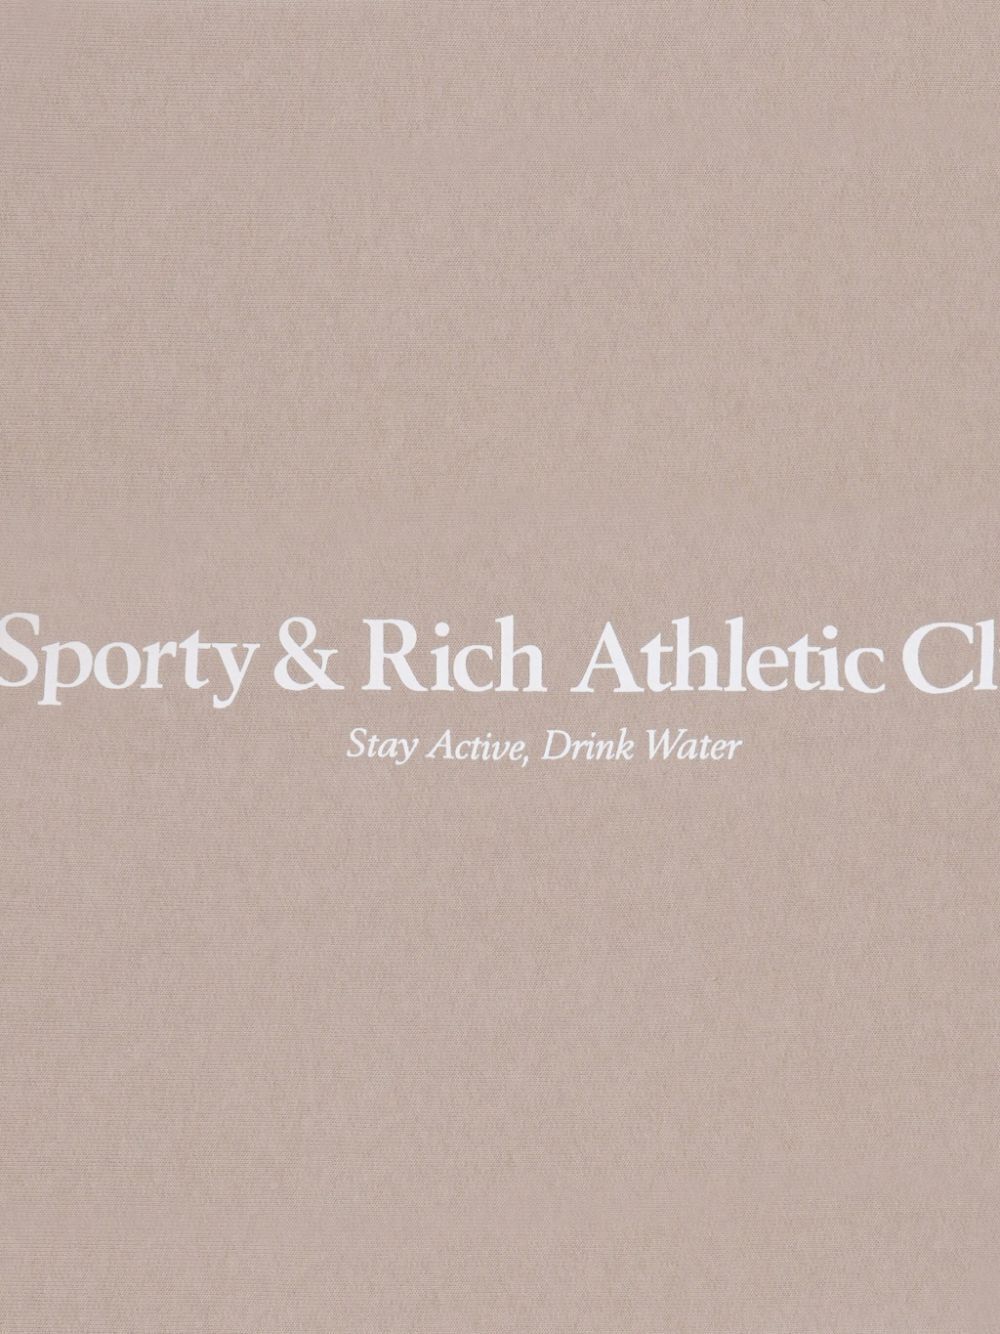 Athletic Club sweatpants